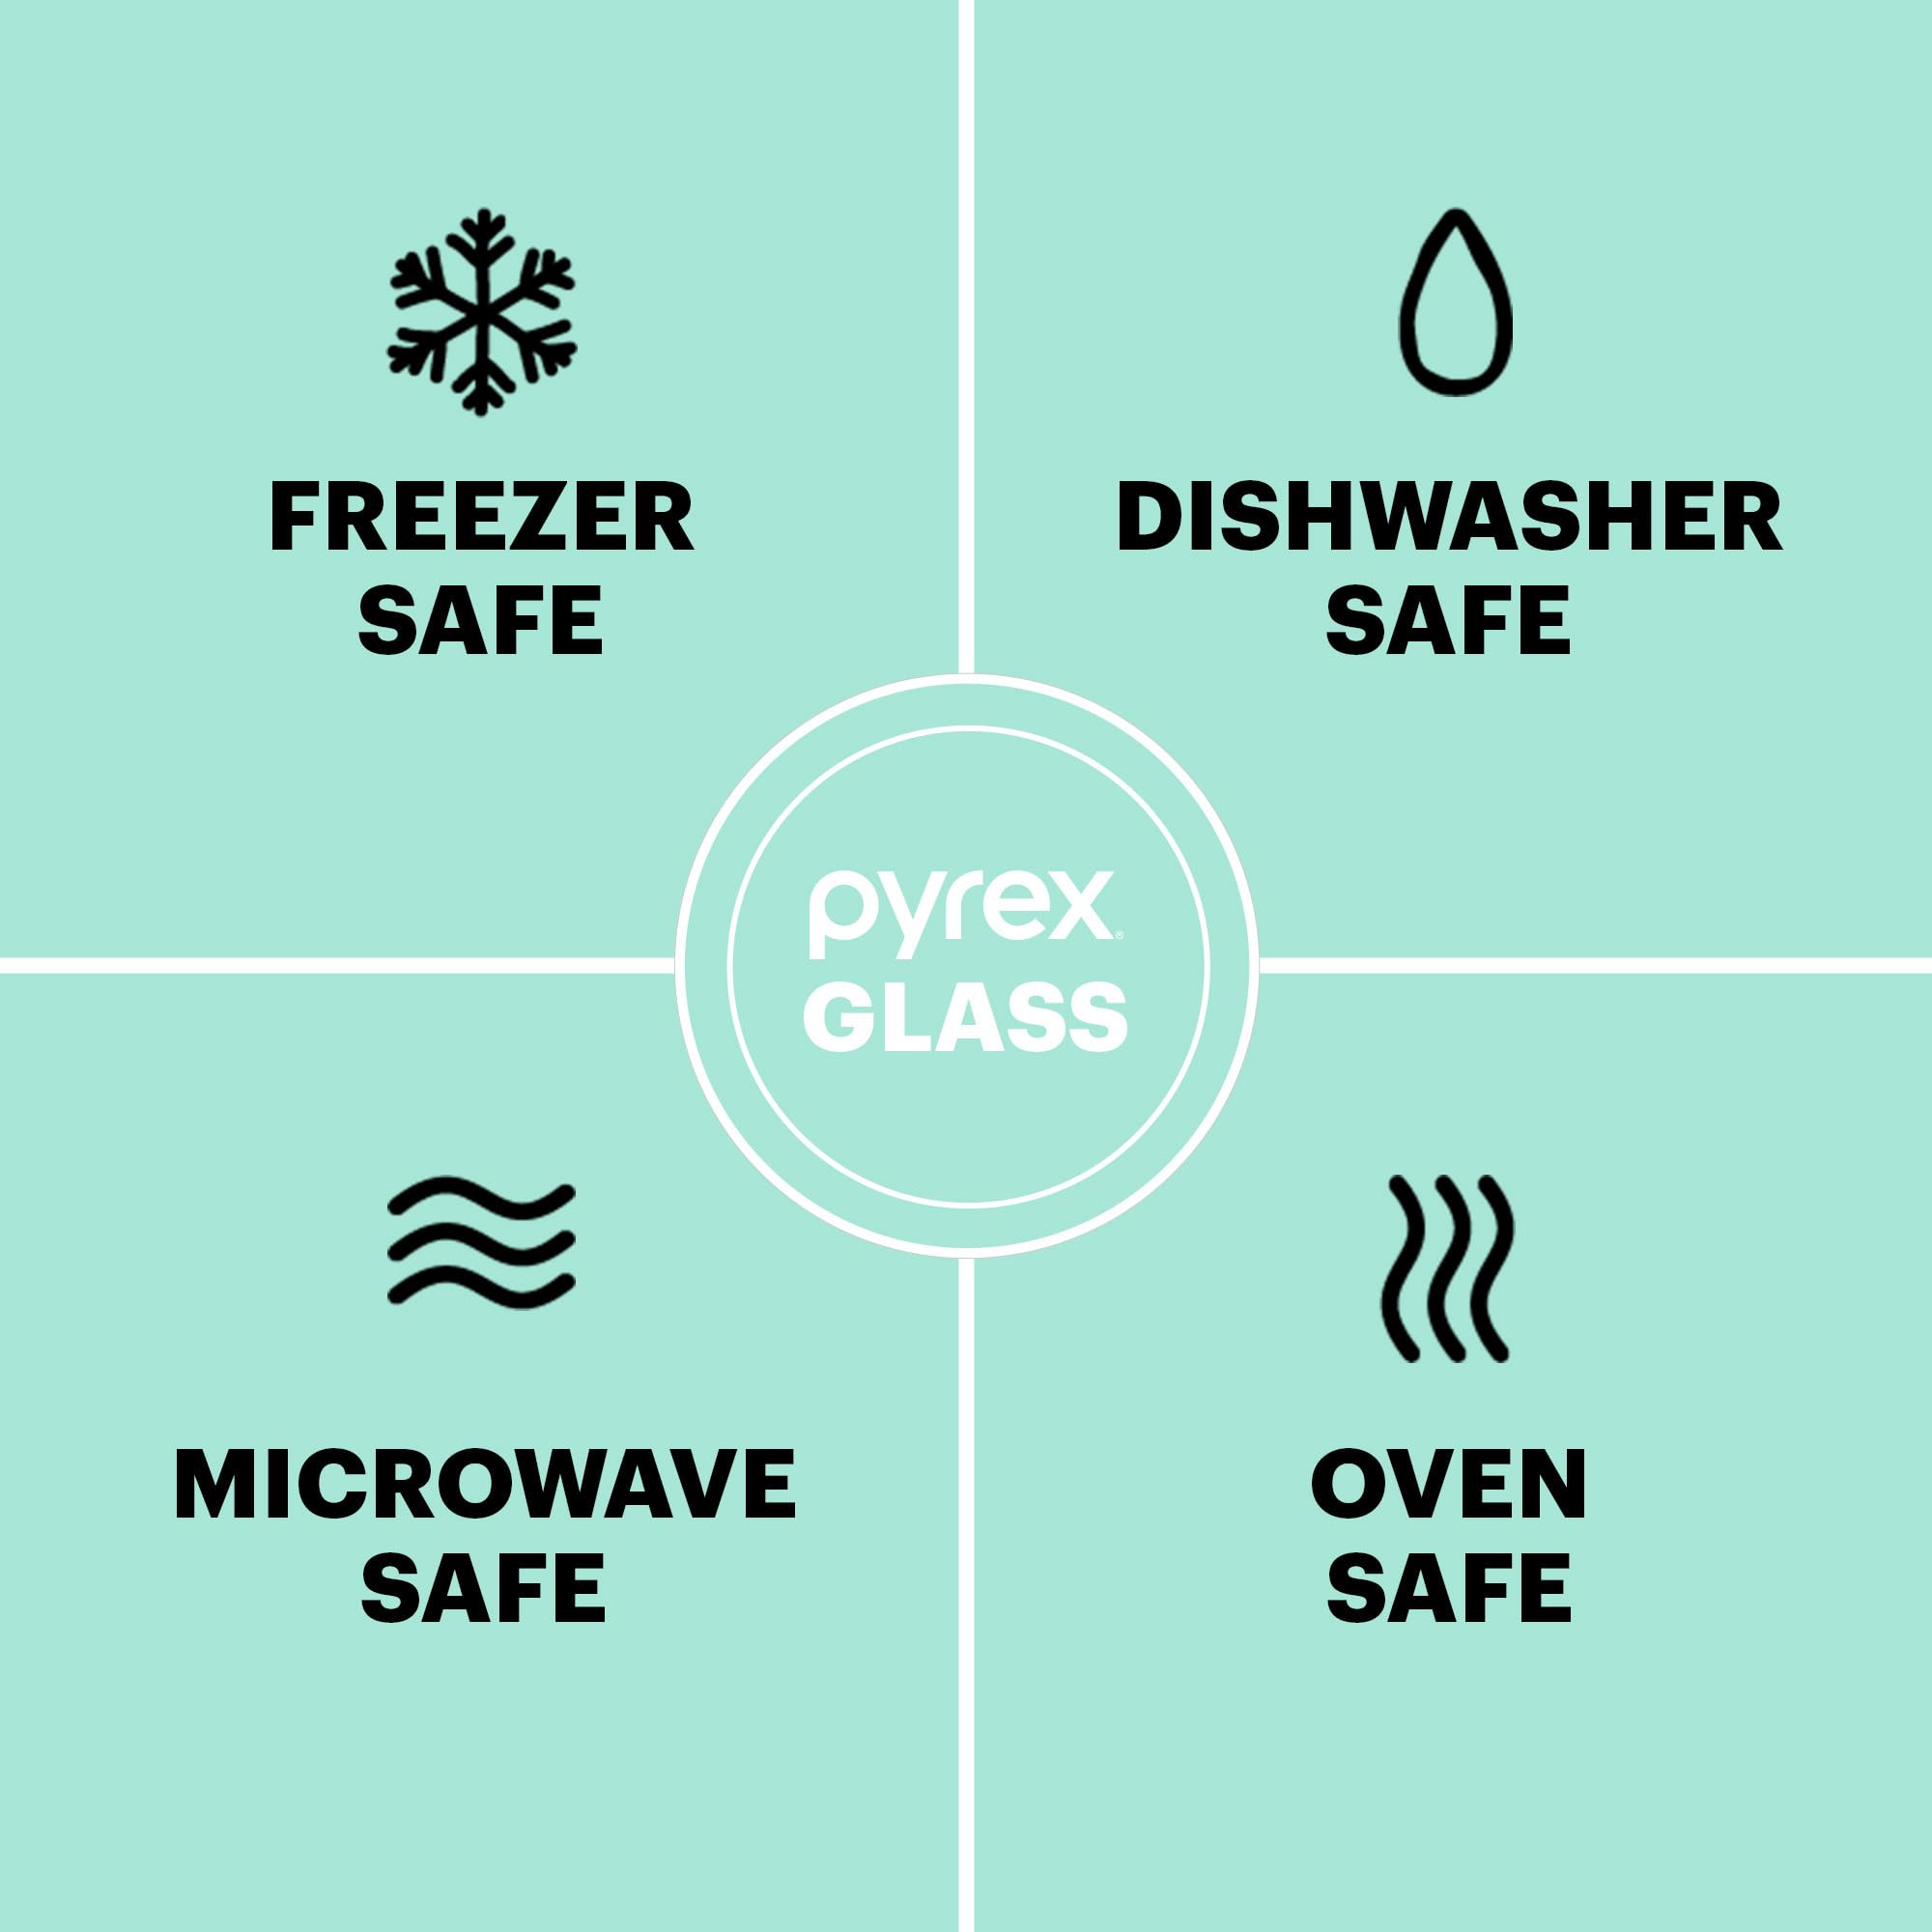 Pyrex Basics 6-Piece Glass Baking Dishes With Lids, (2 QT, 3 QT, 4.8 QT) Bakeware Sets, Freezer and Microwave Safe